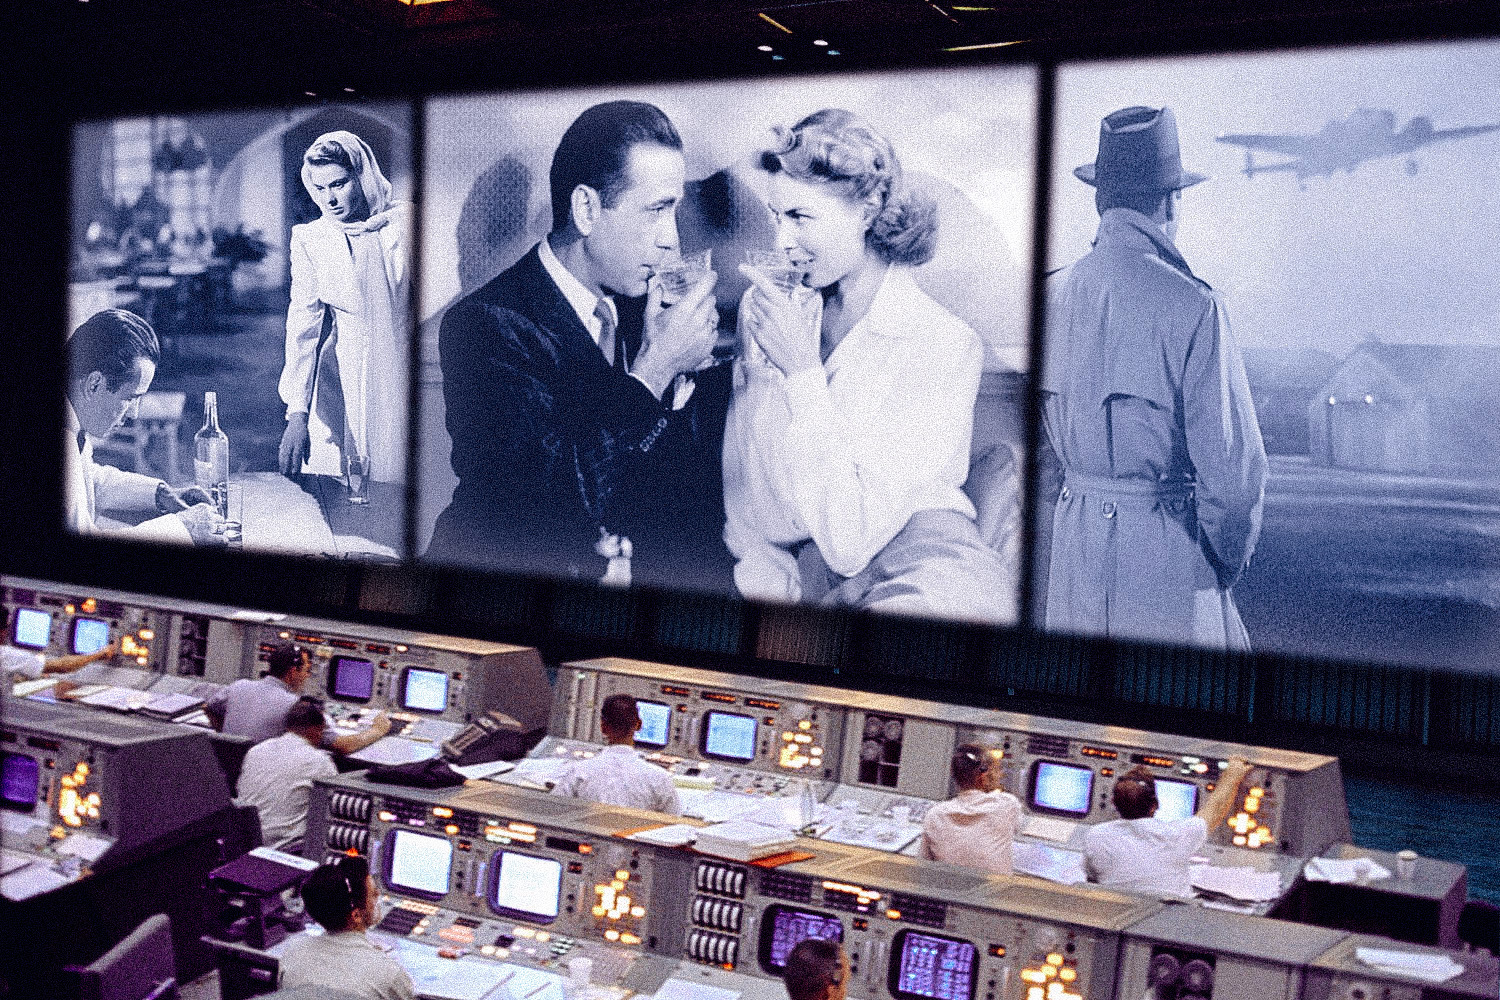 Casablanca plays on the big screen inside a NASA control Room